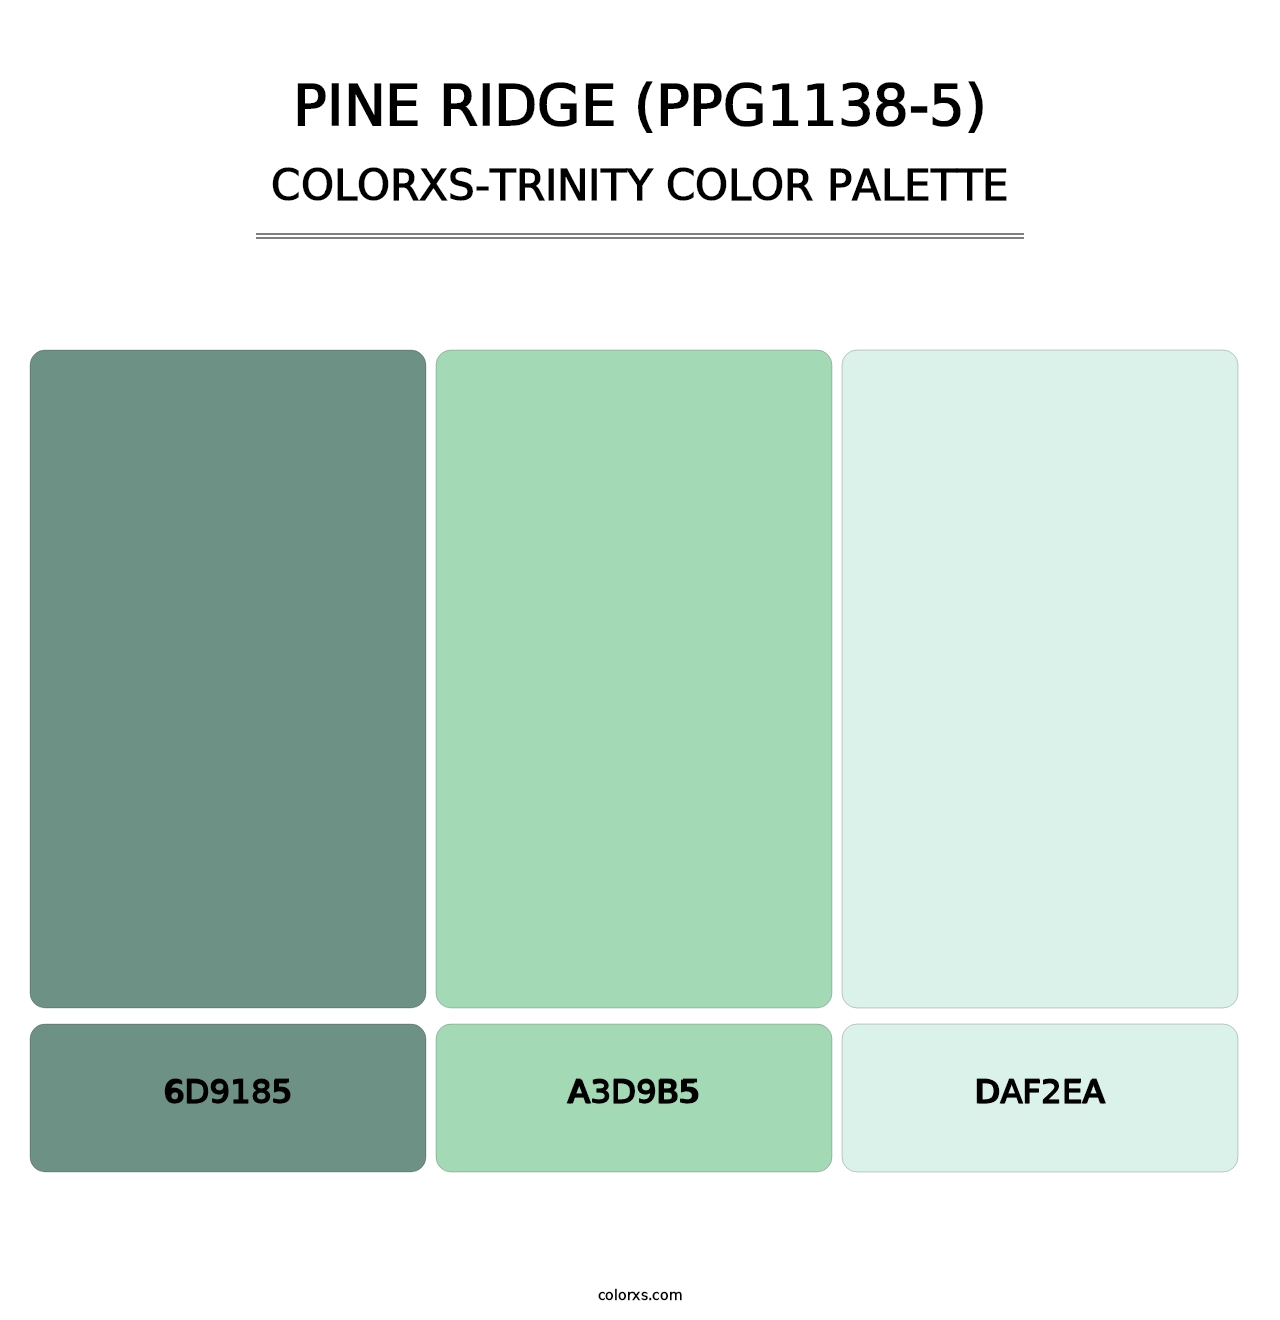 Pine Ridge (PPG1138-5) - Colorxs Trinity Palette